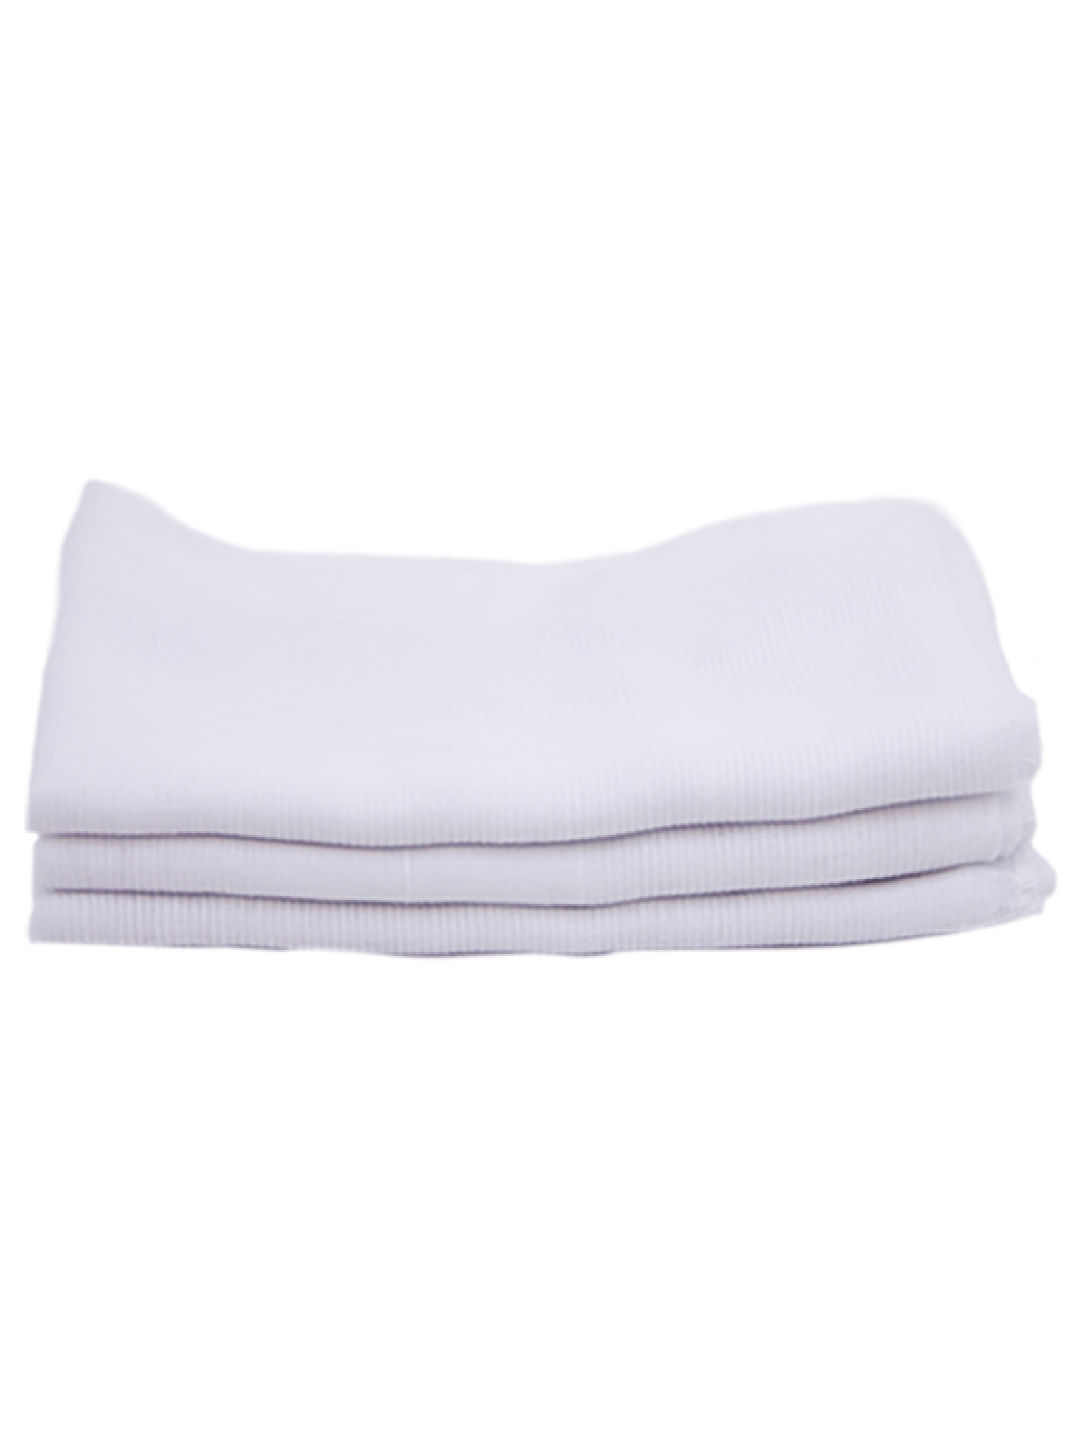 BestCare Cloth Diaper Gauze Pack of 3